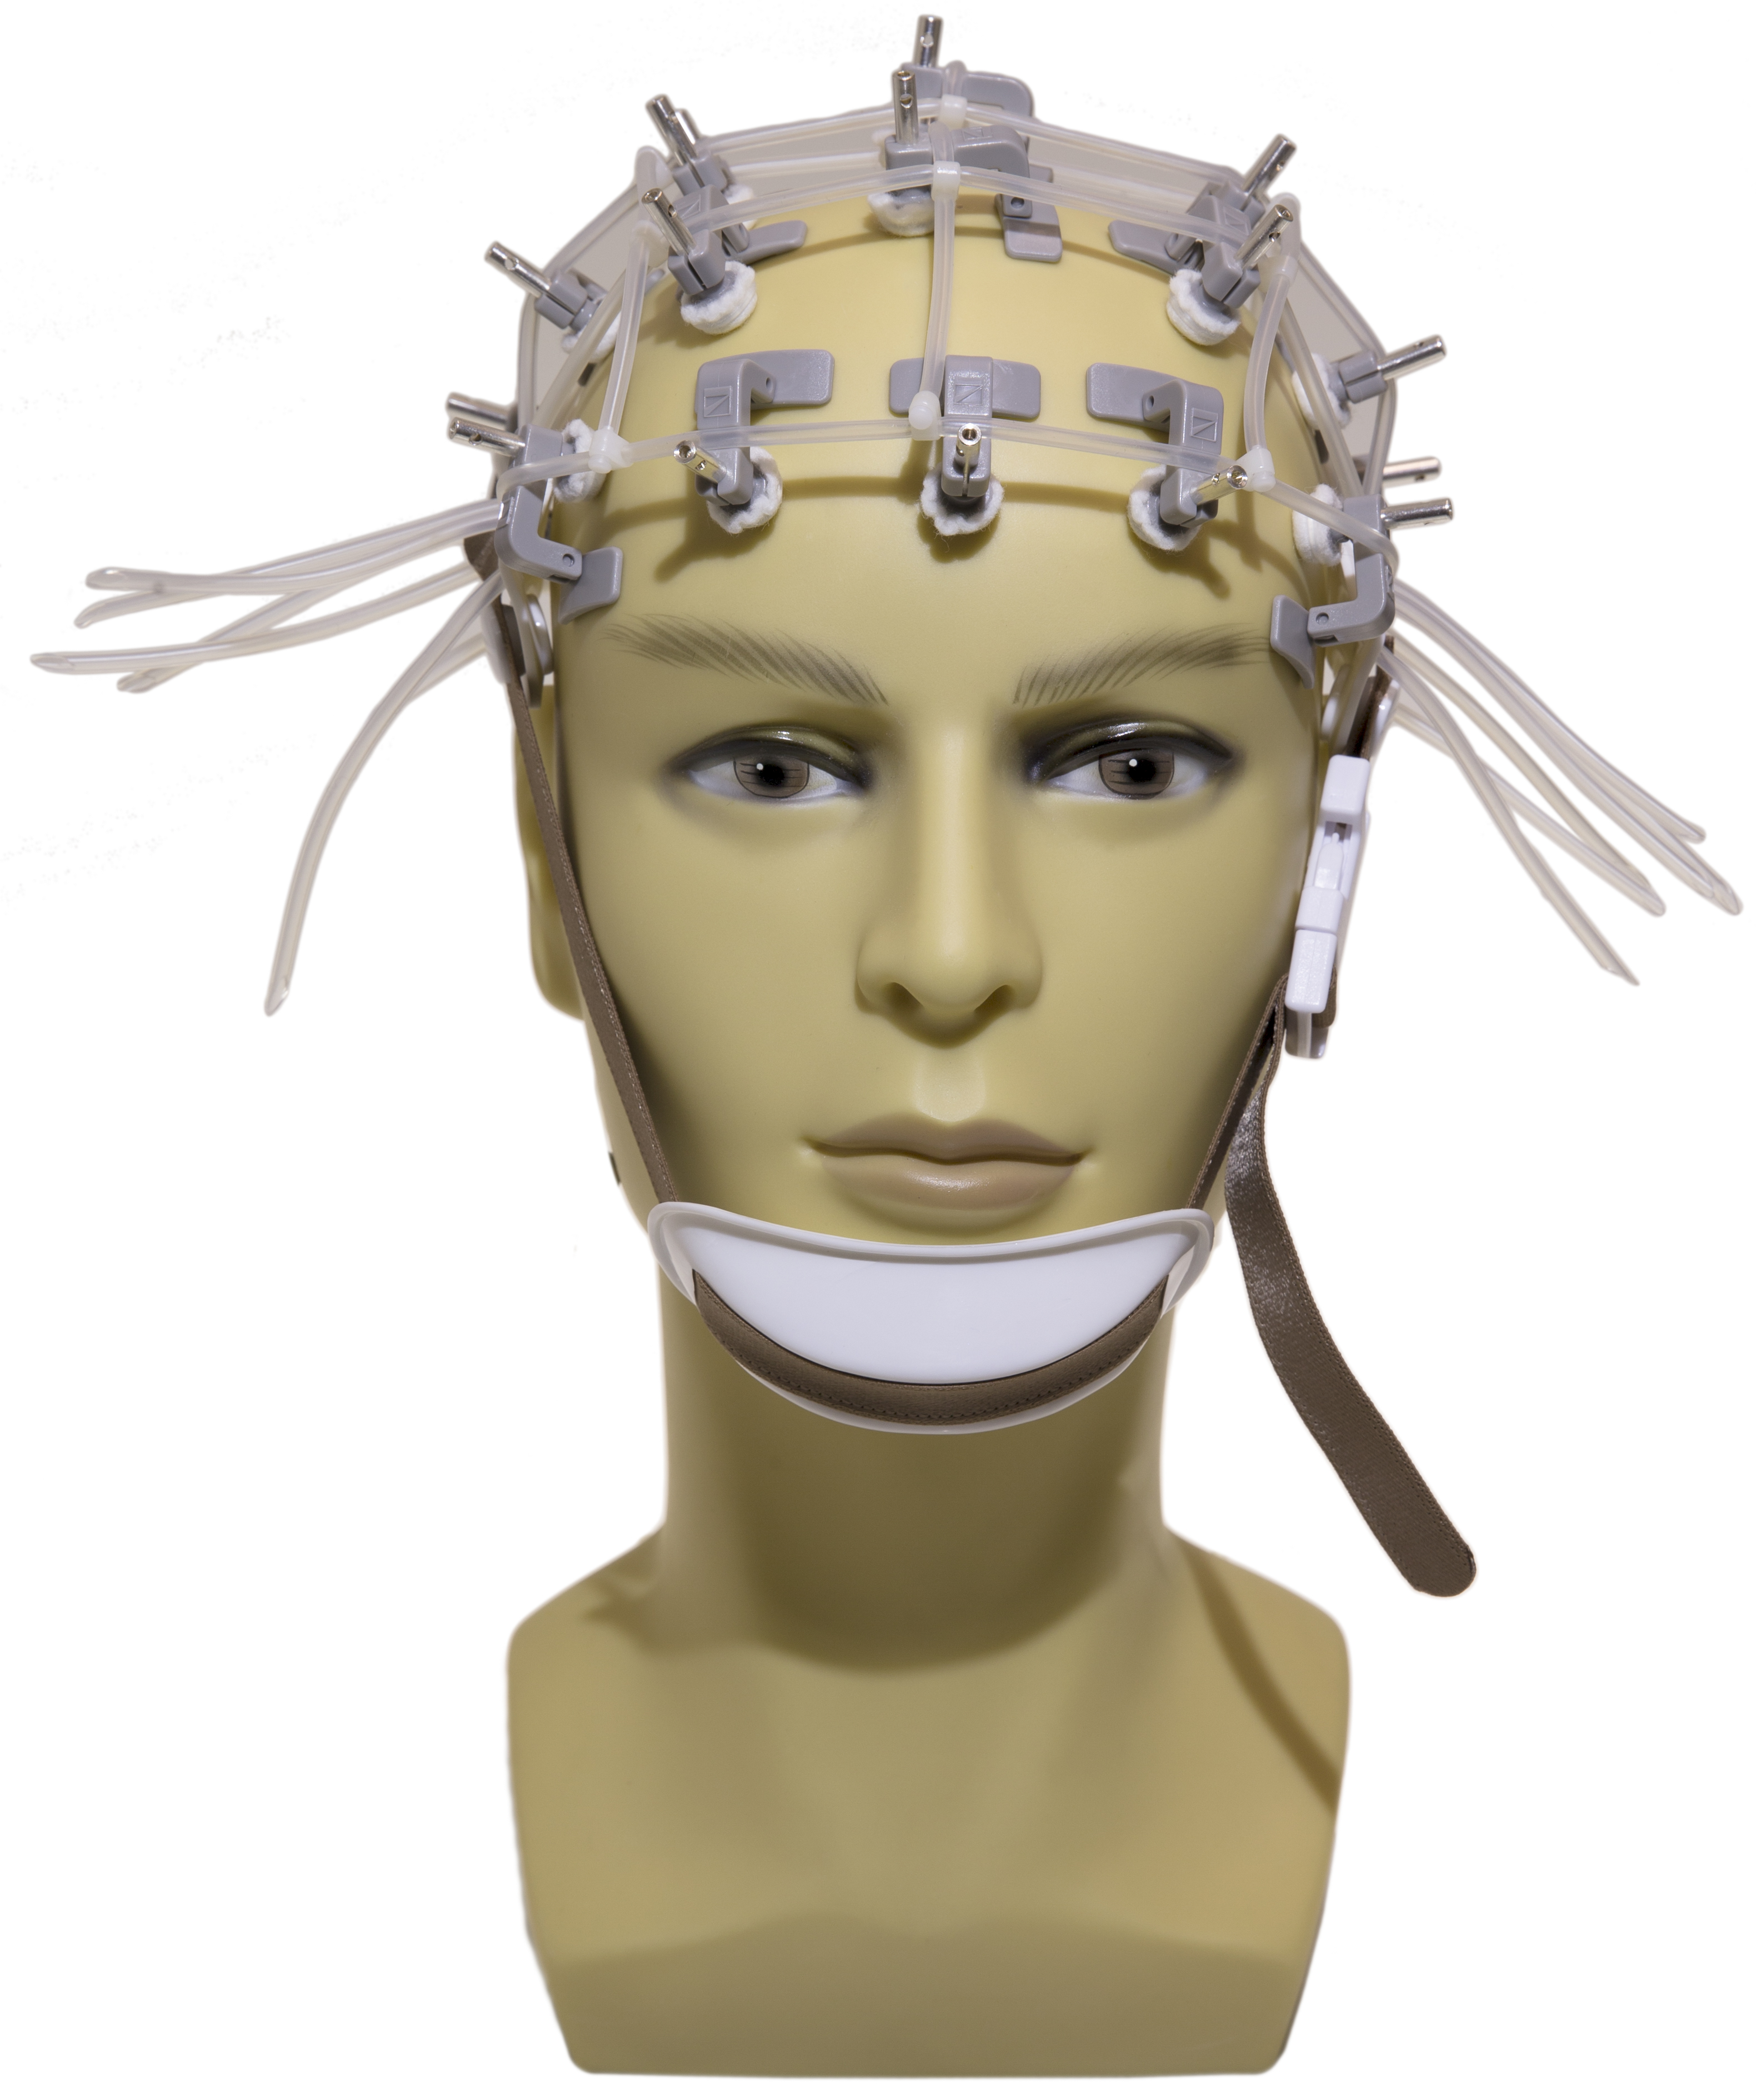 EEG Haube Nihon Kohden H564A Universalhaube (größenverstellbar) NKD711021